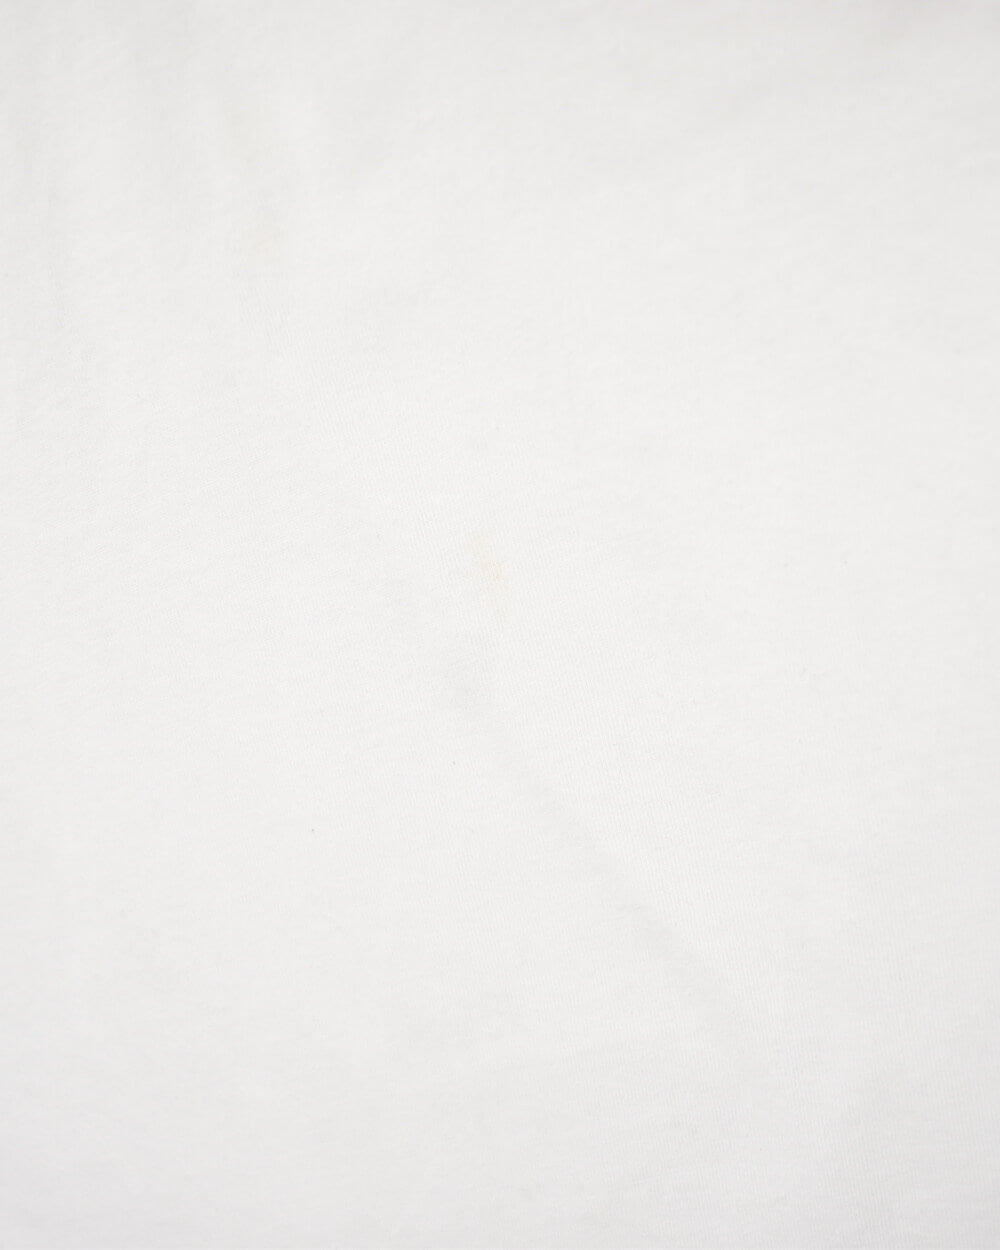 White Reebok Polo Shirt - Medium